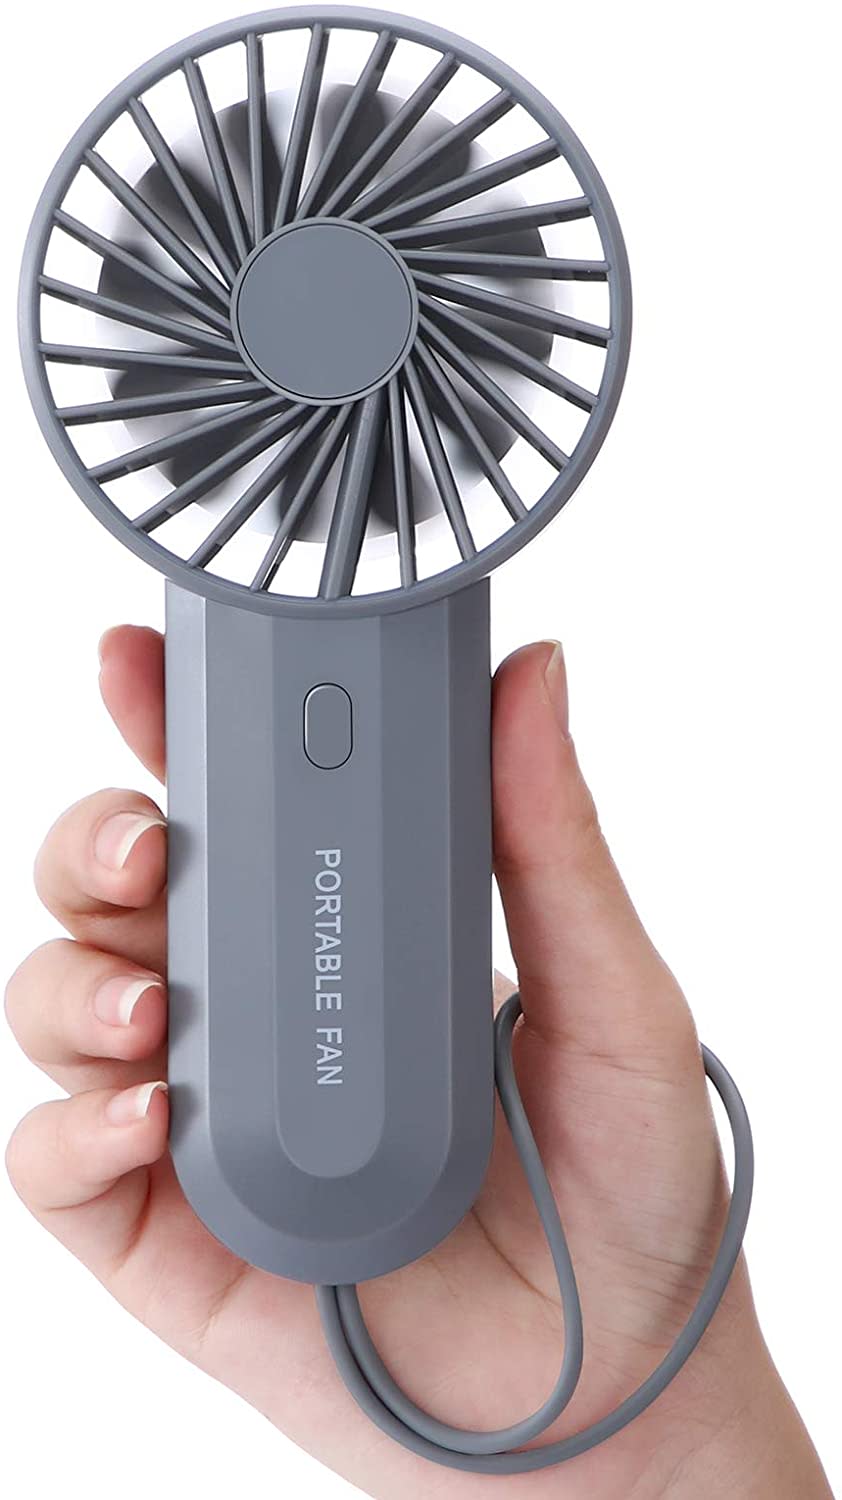 SmartDevil Mini Handheld Fan, $29.99